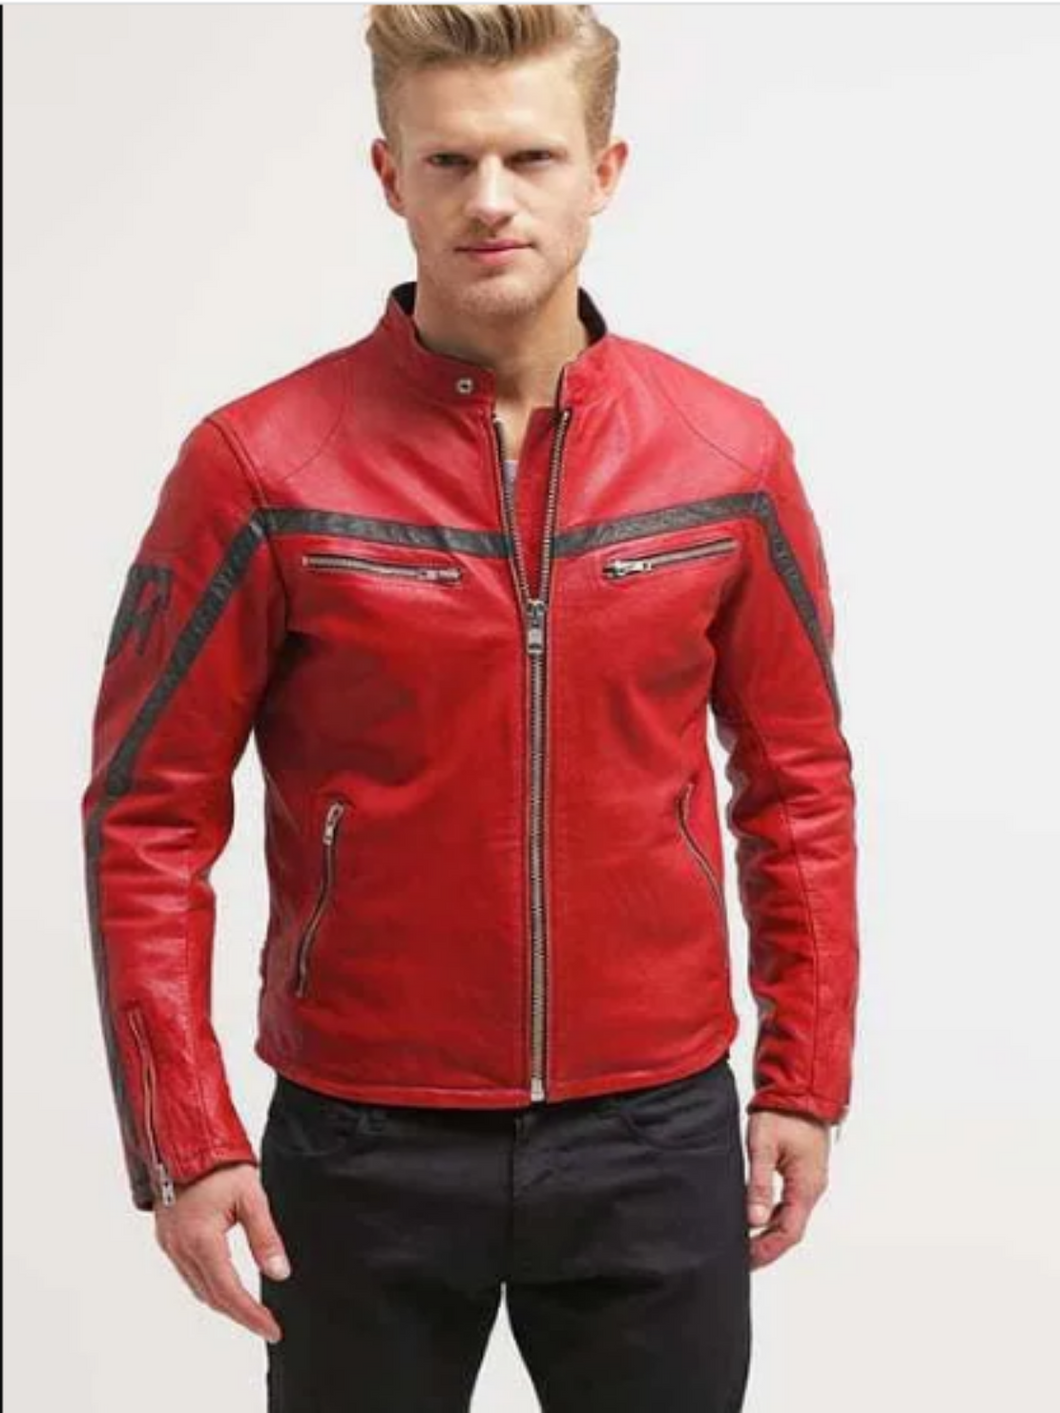 Mens Motorcycle Red leather Biker Jacket